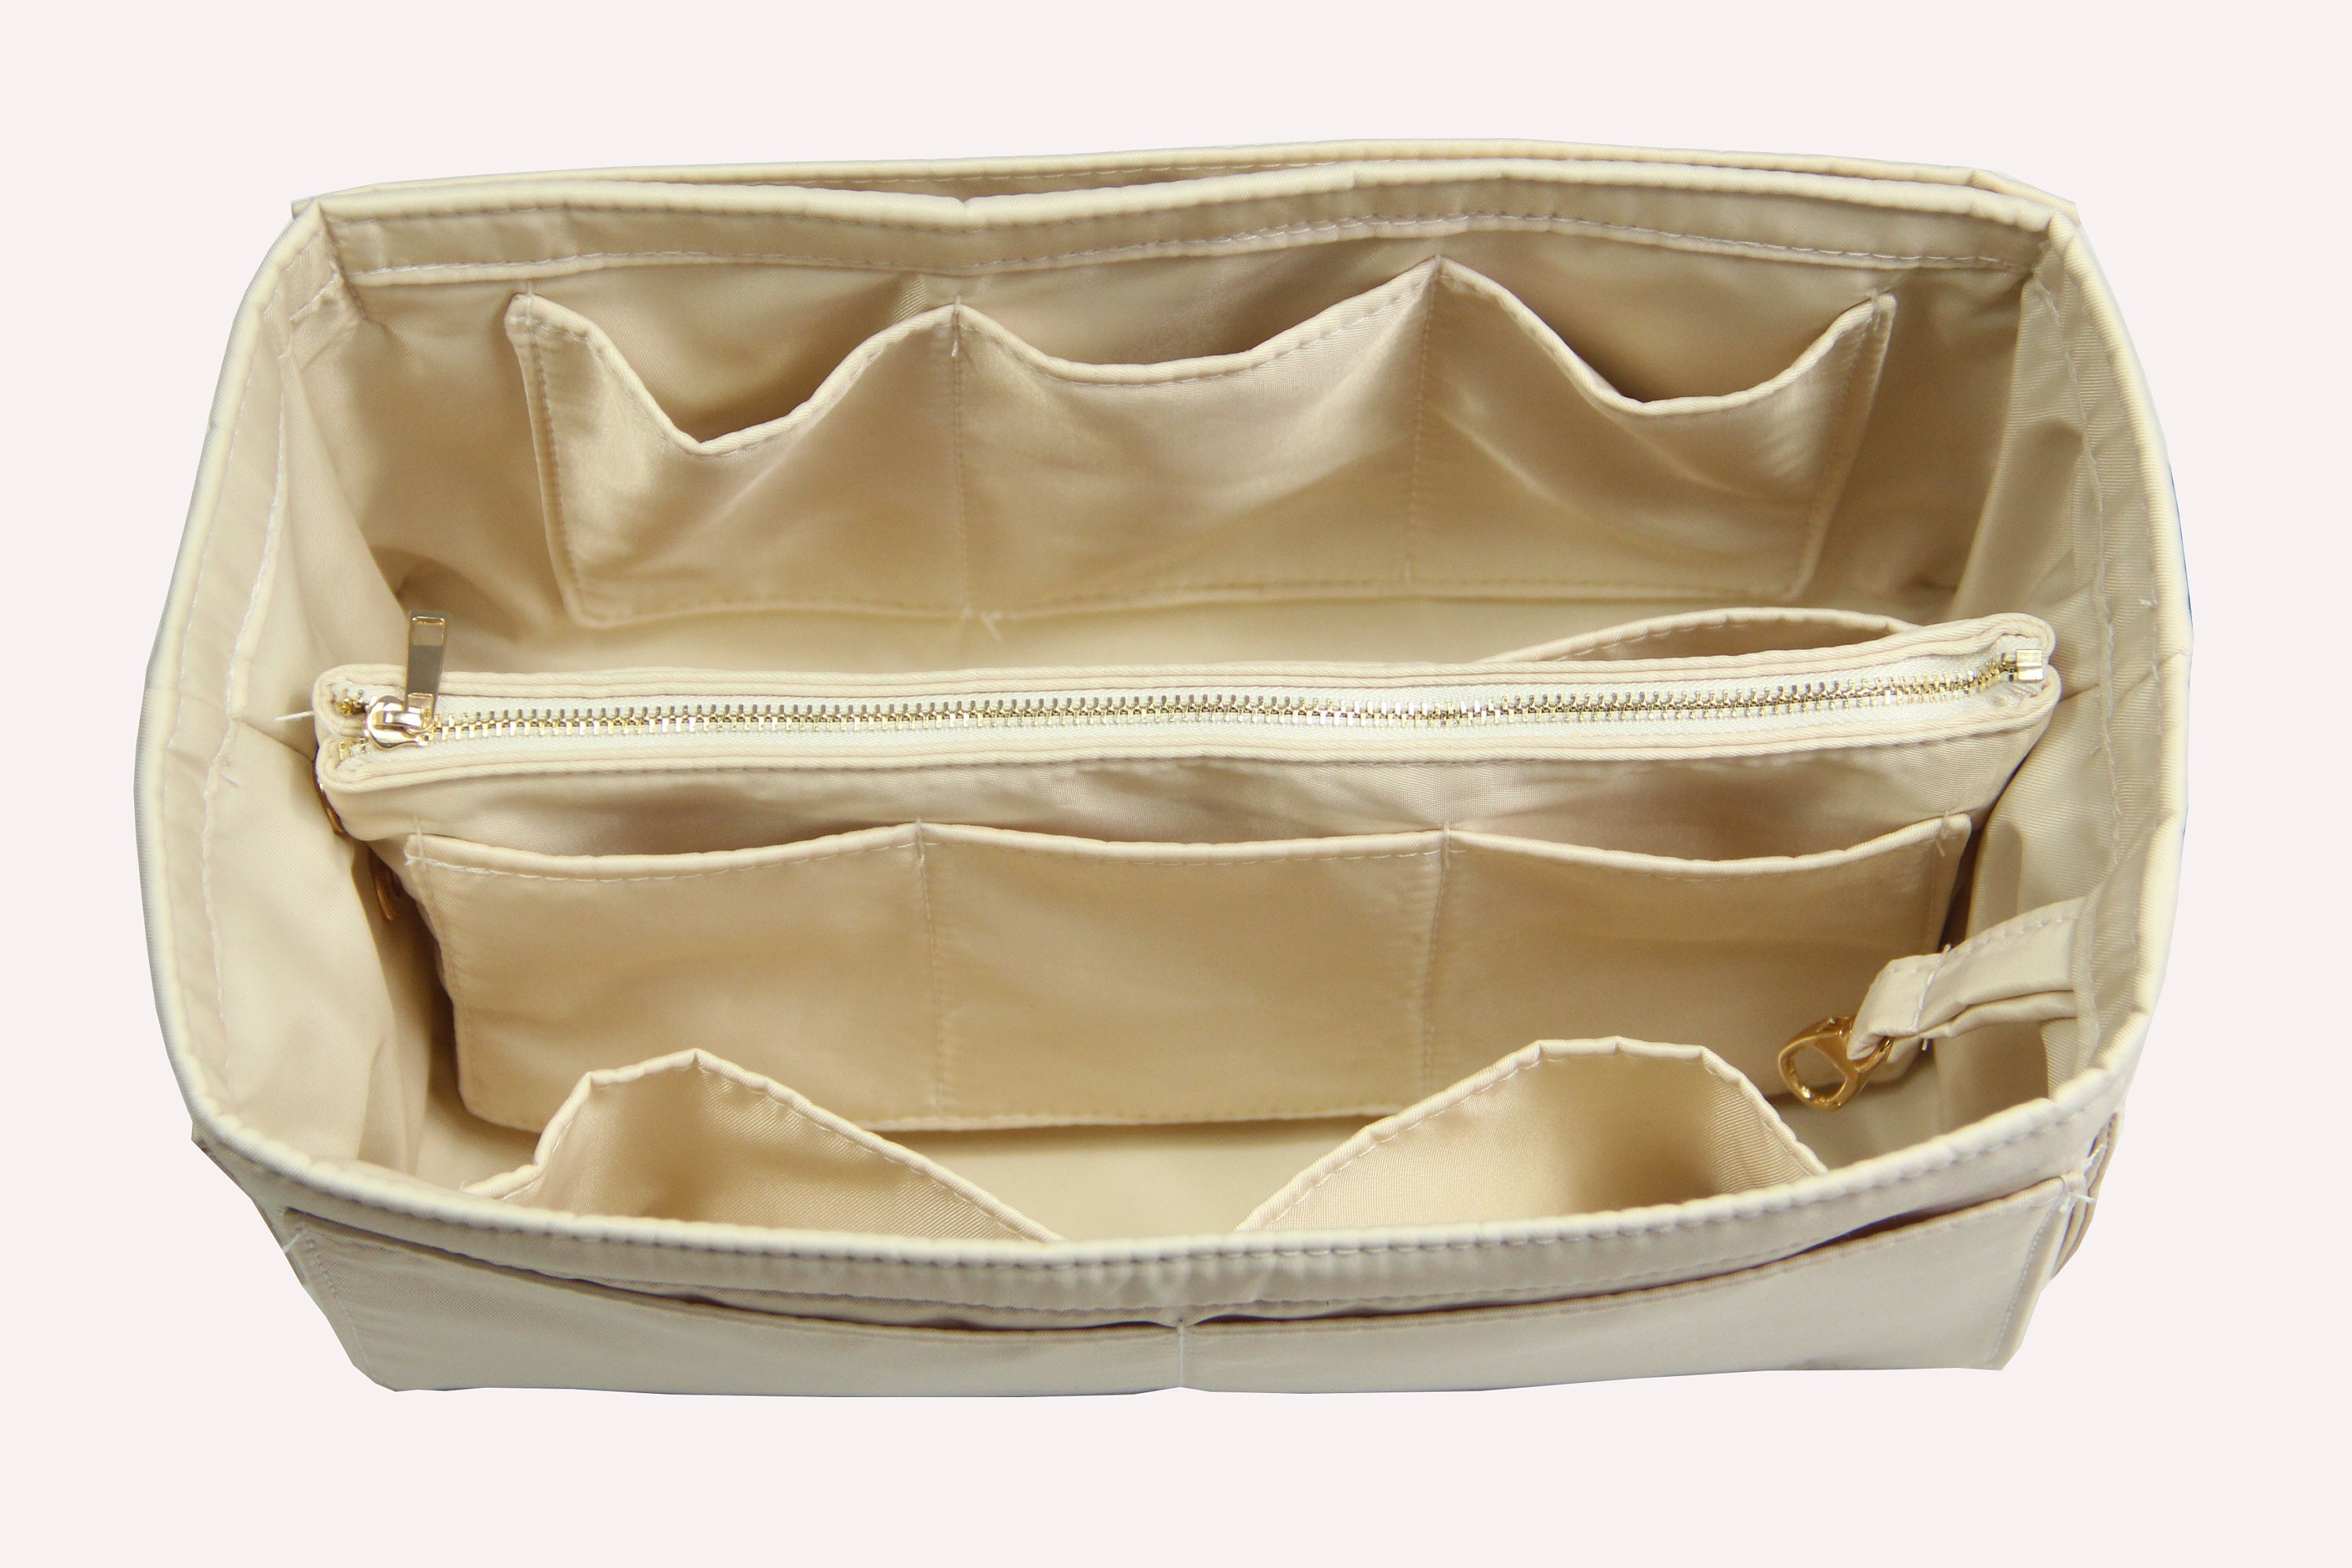 Best Kate Spade purses: Shop totes, satchels, crossbody bags, wallets